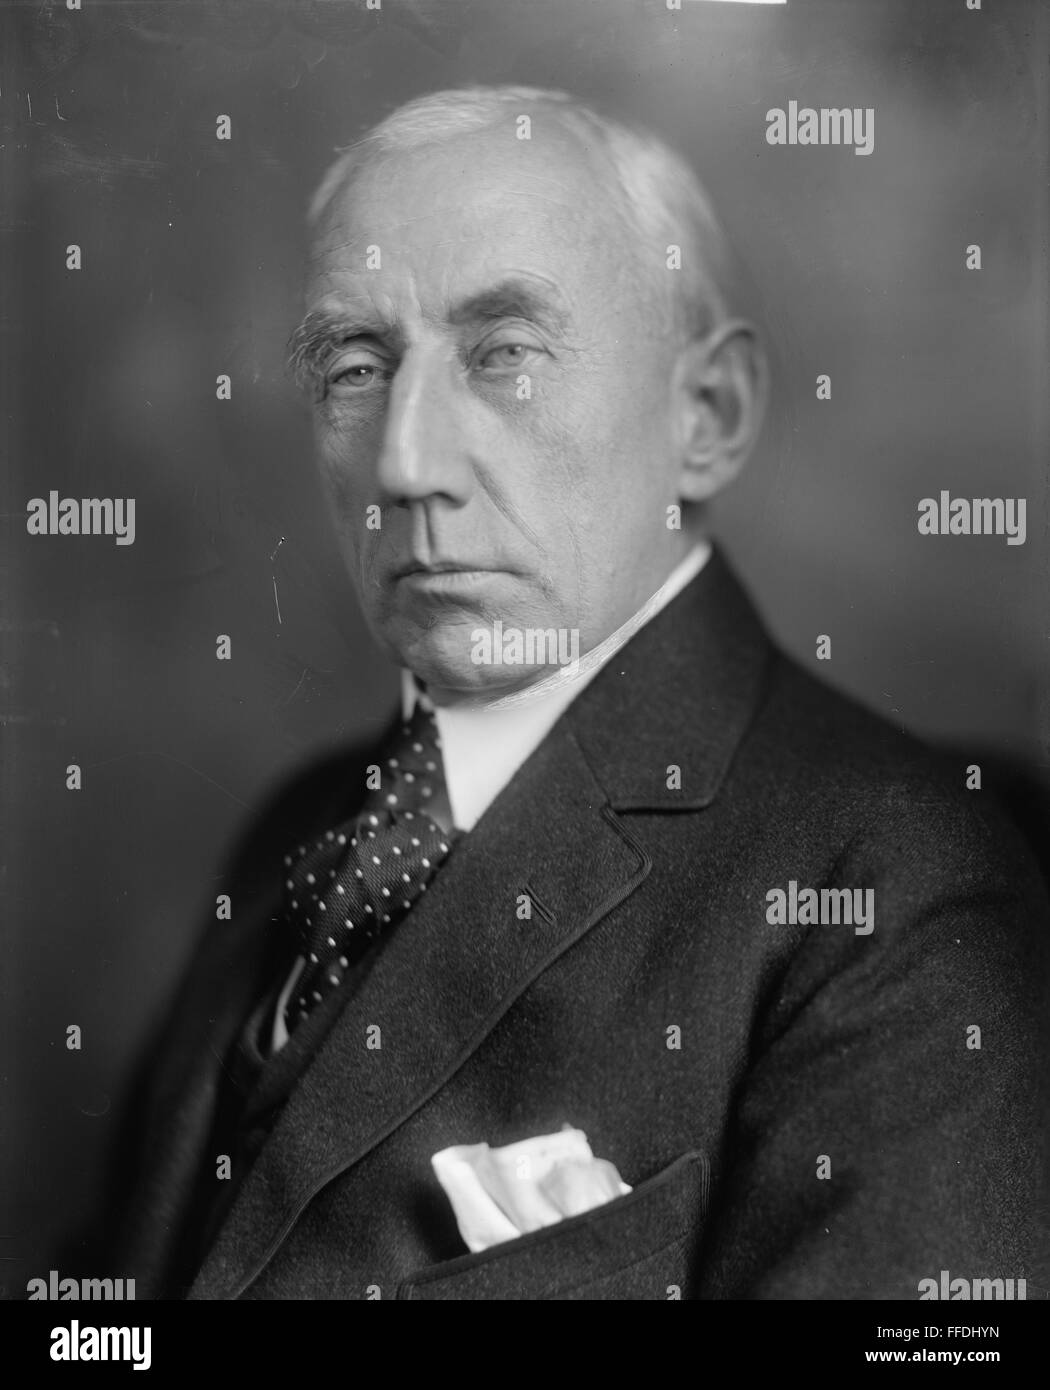 ROALD AMUNDSEN (1872-1928). /nNorwegian polar explorer. Photograph, early 20th century. Stock Photo